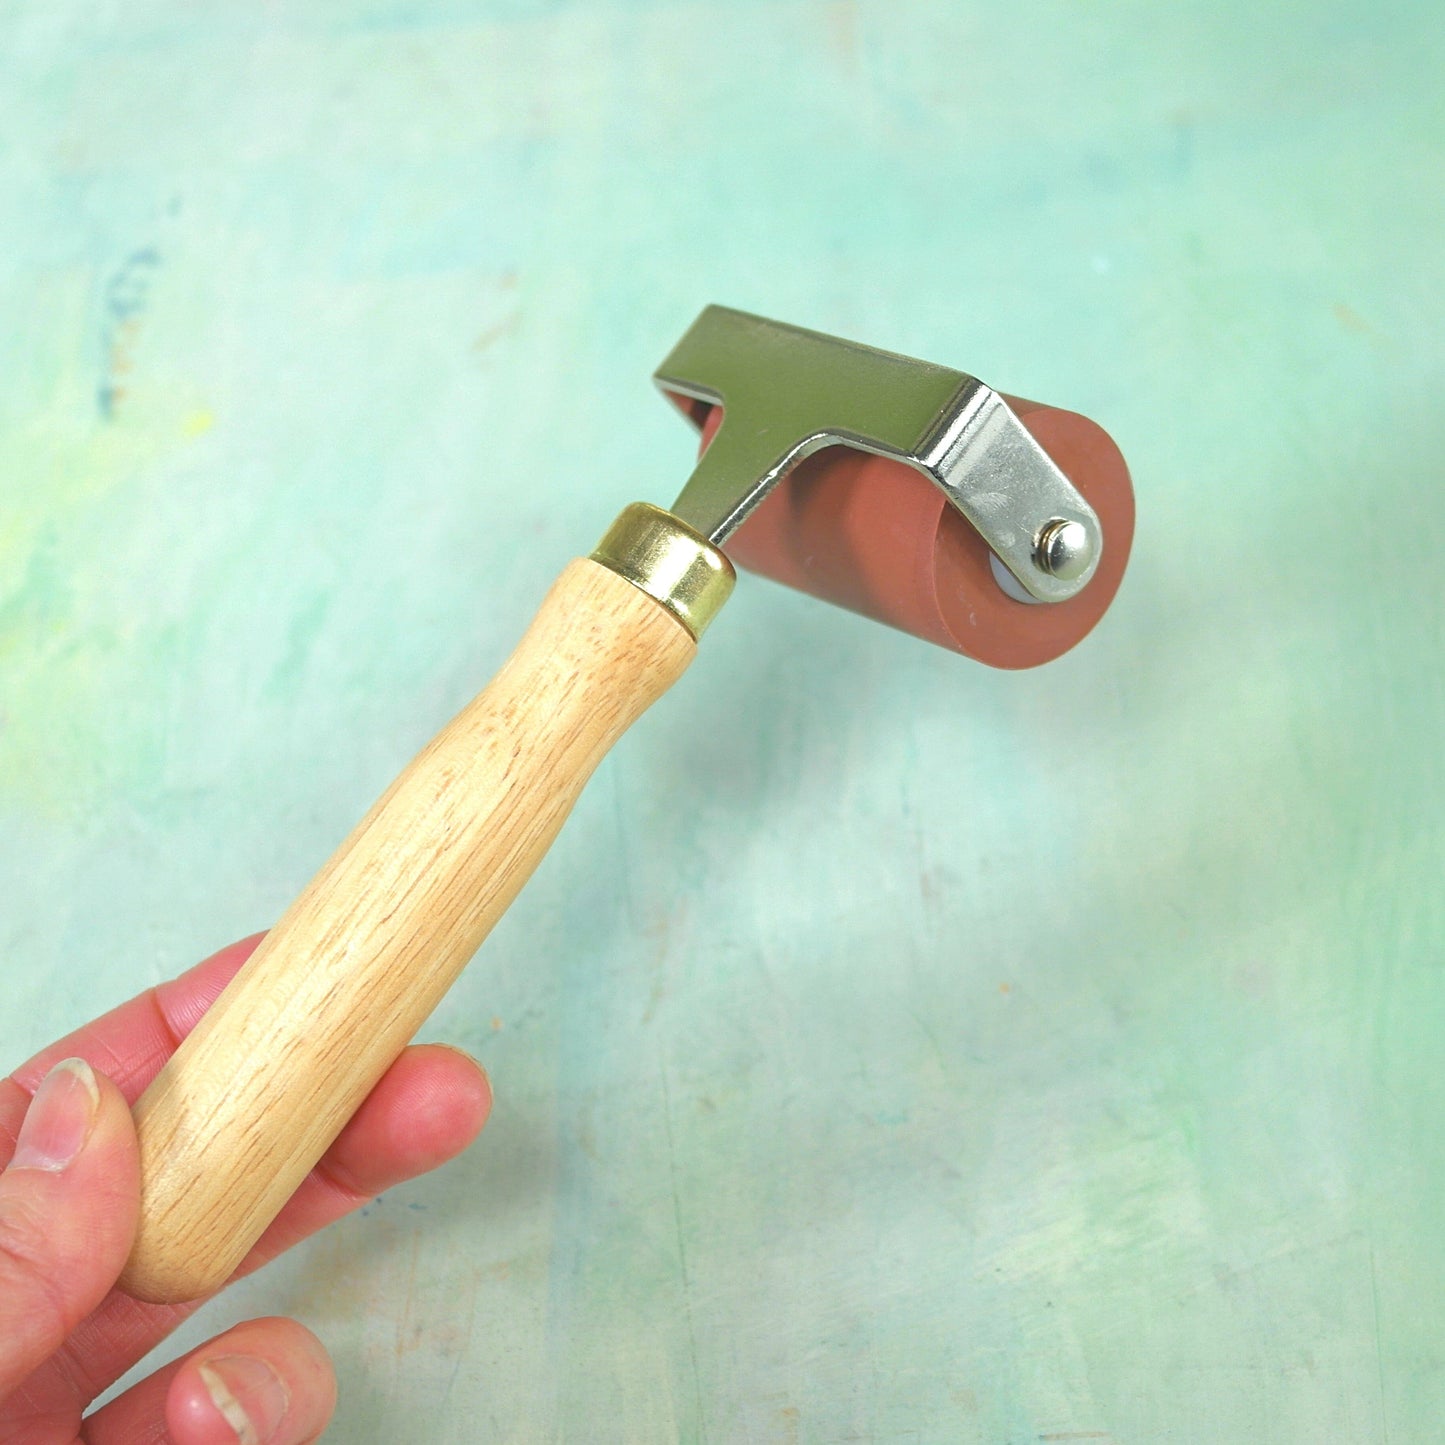 Wooden handle brayer or roller